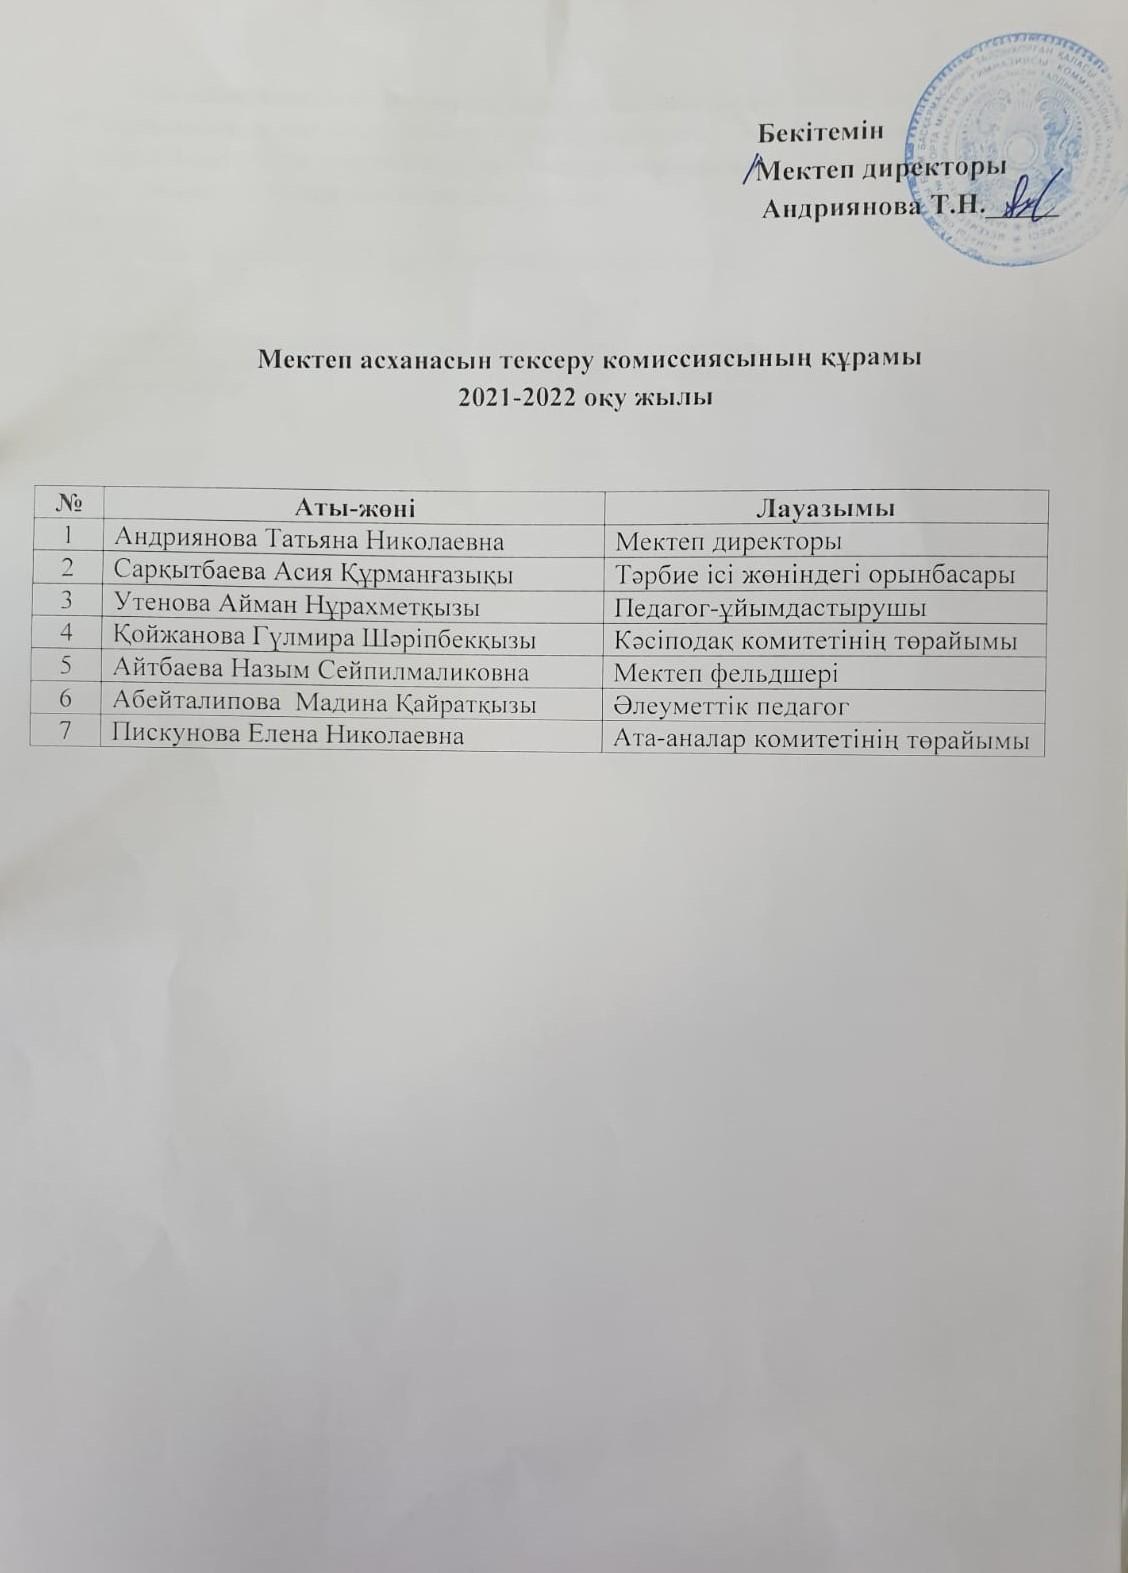 Мектеп асханасын тексеру комиссиясының құрамы 2021- 2022 оқу жылы